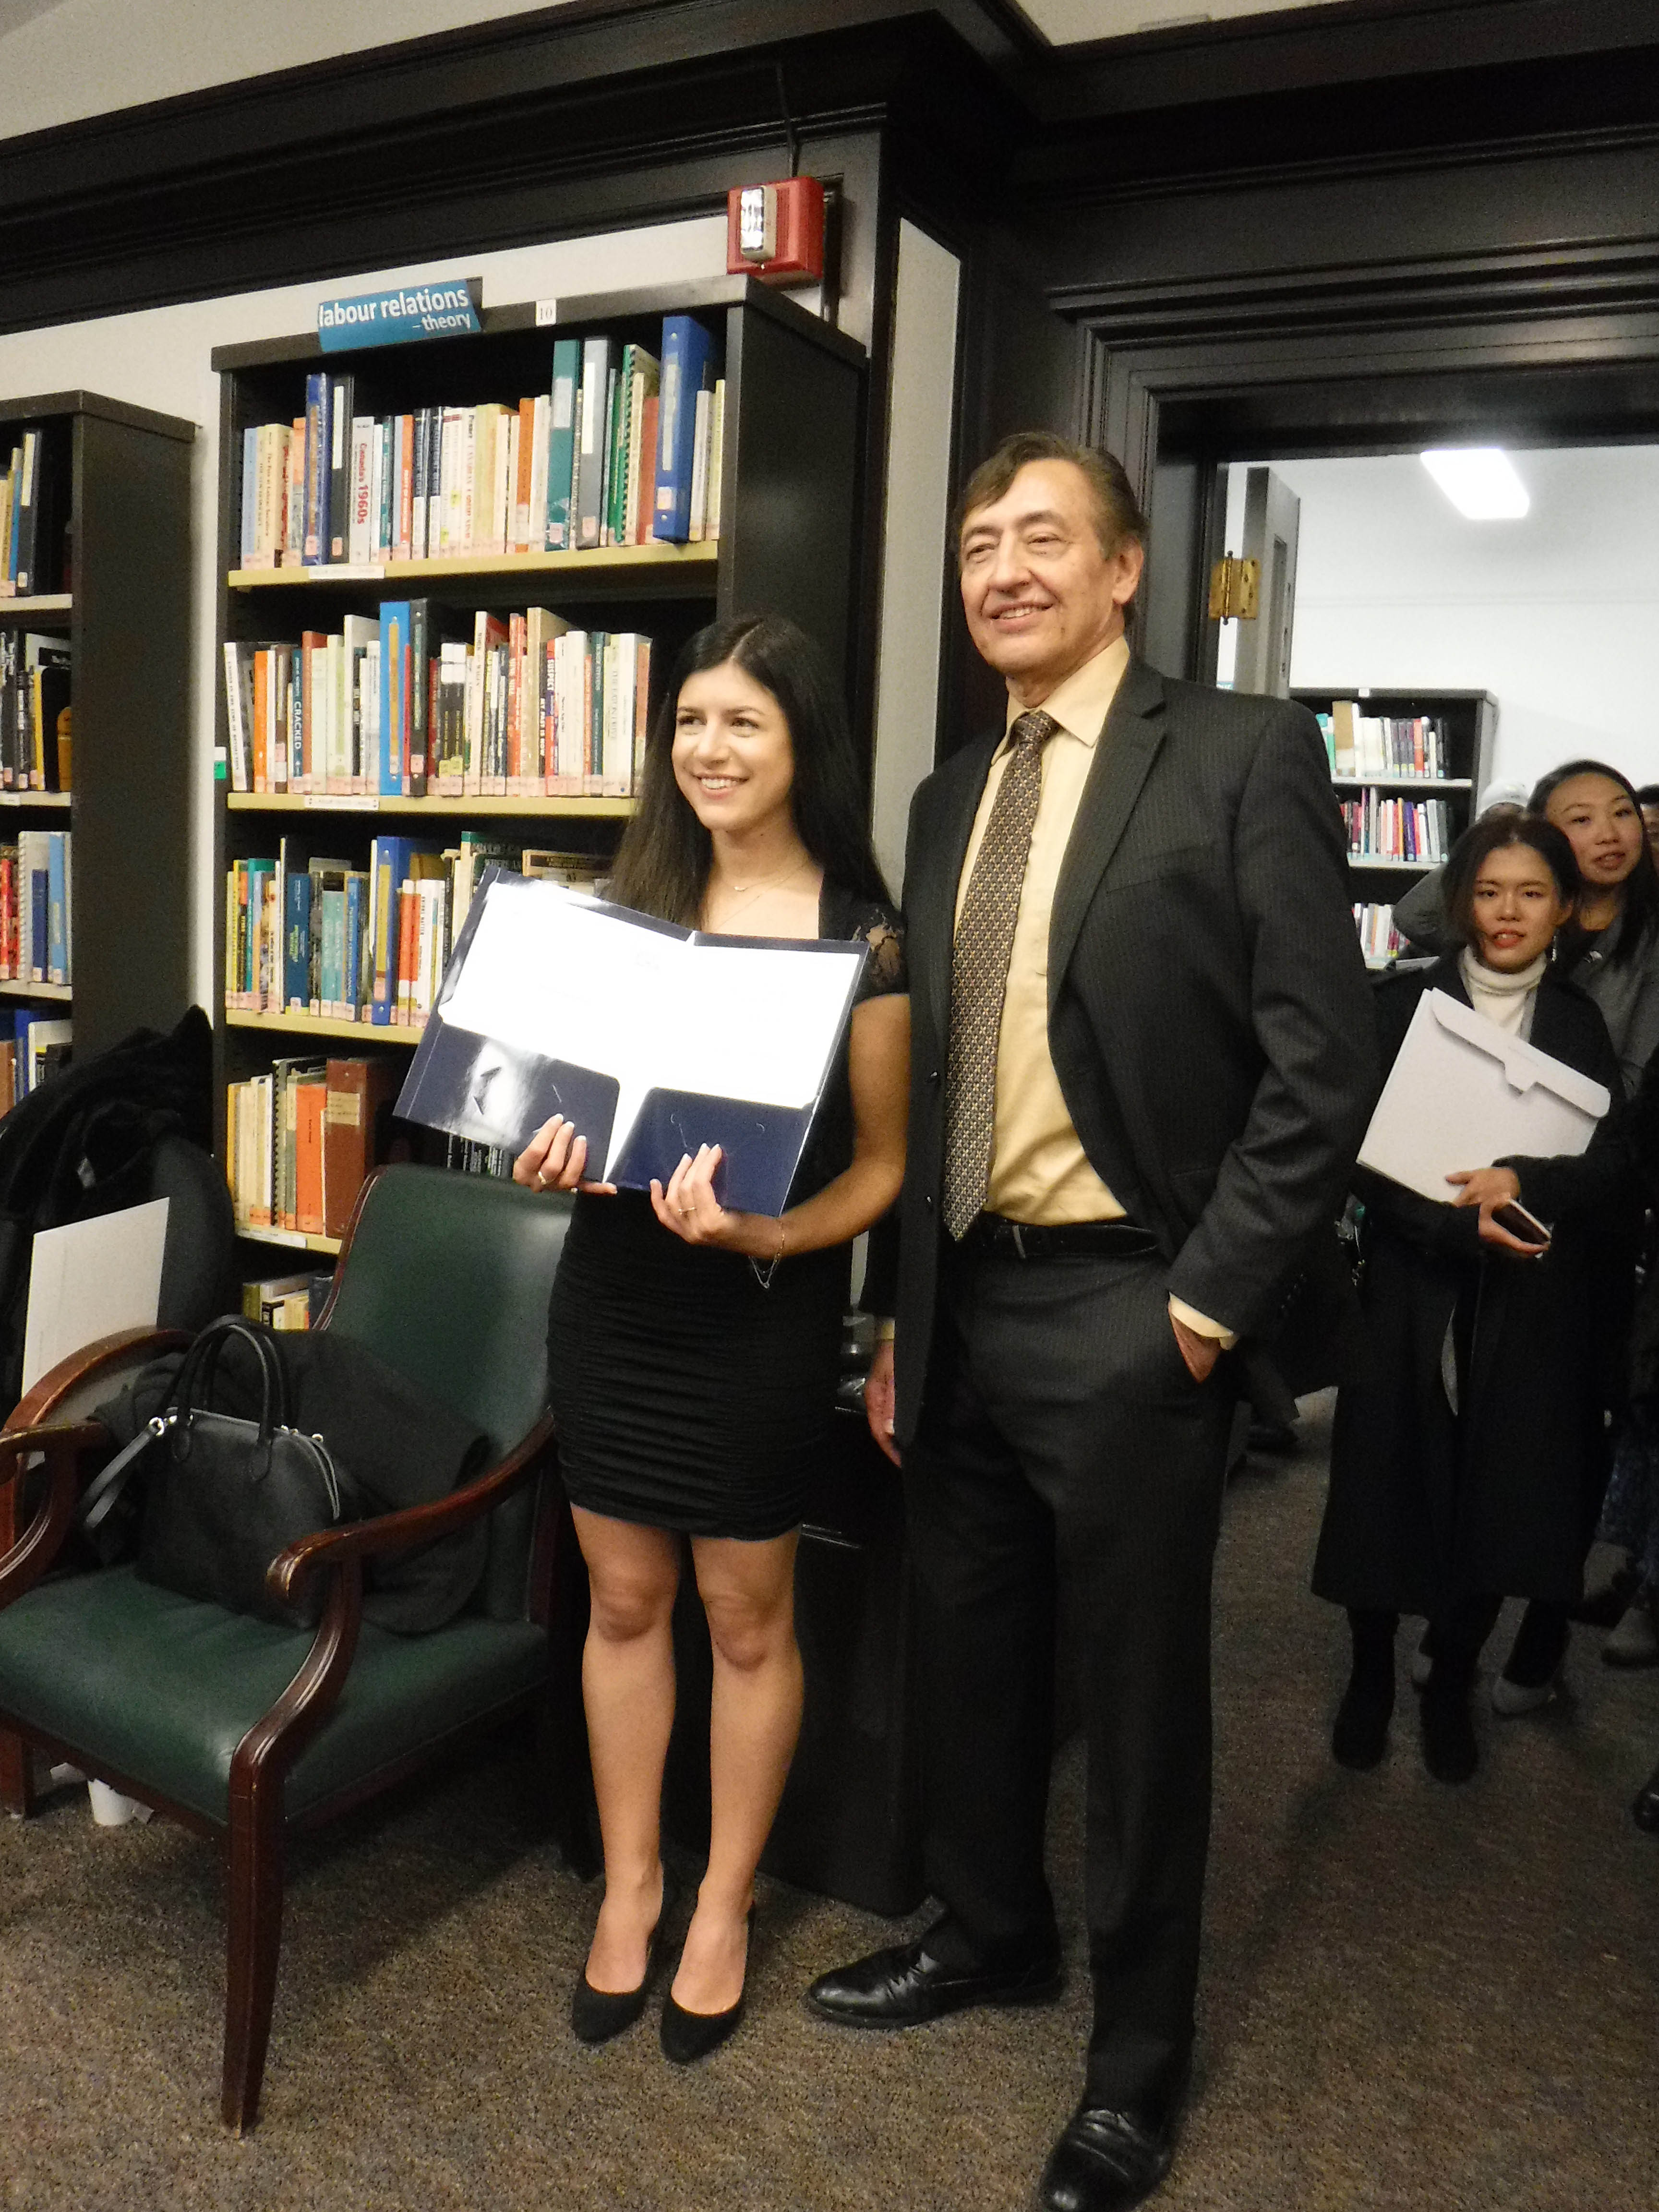 Ioana Petrar-Silca poses with Professor Frank Reid and her prize 